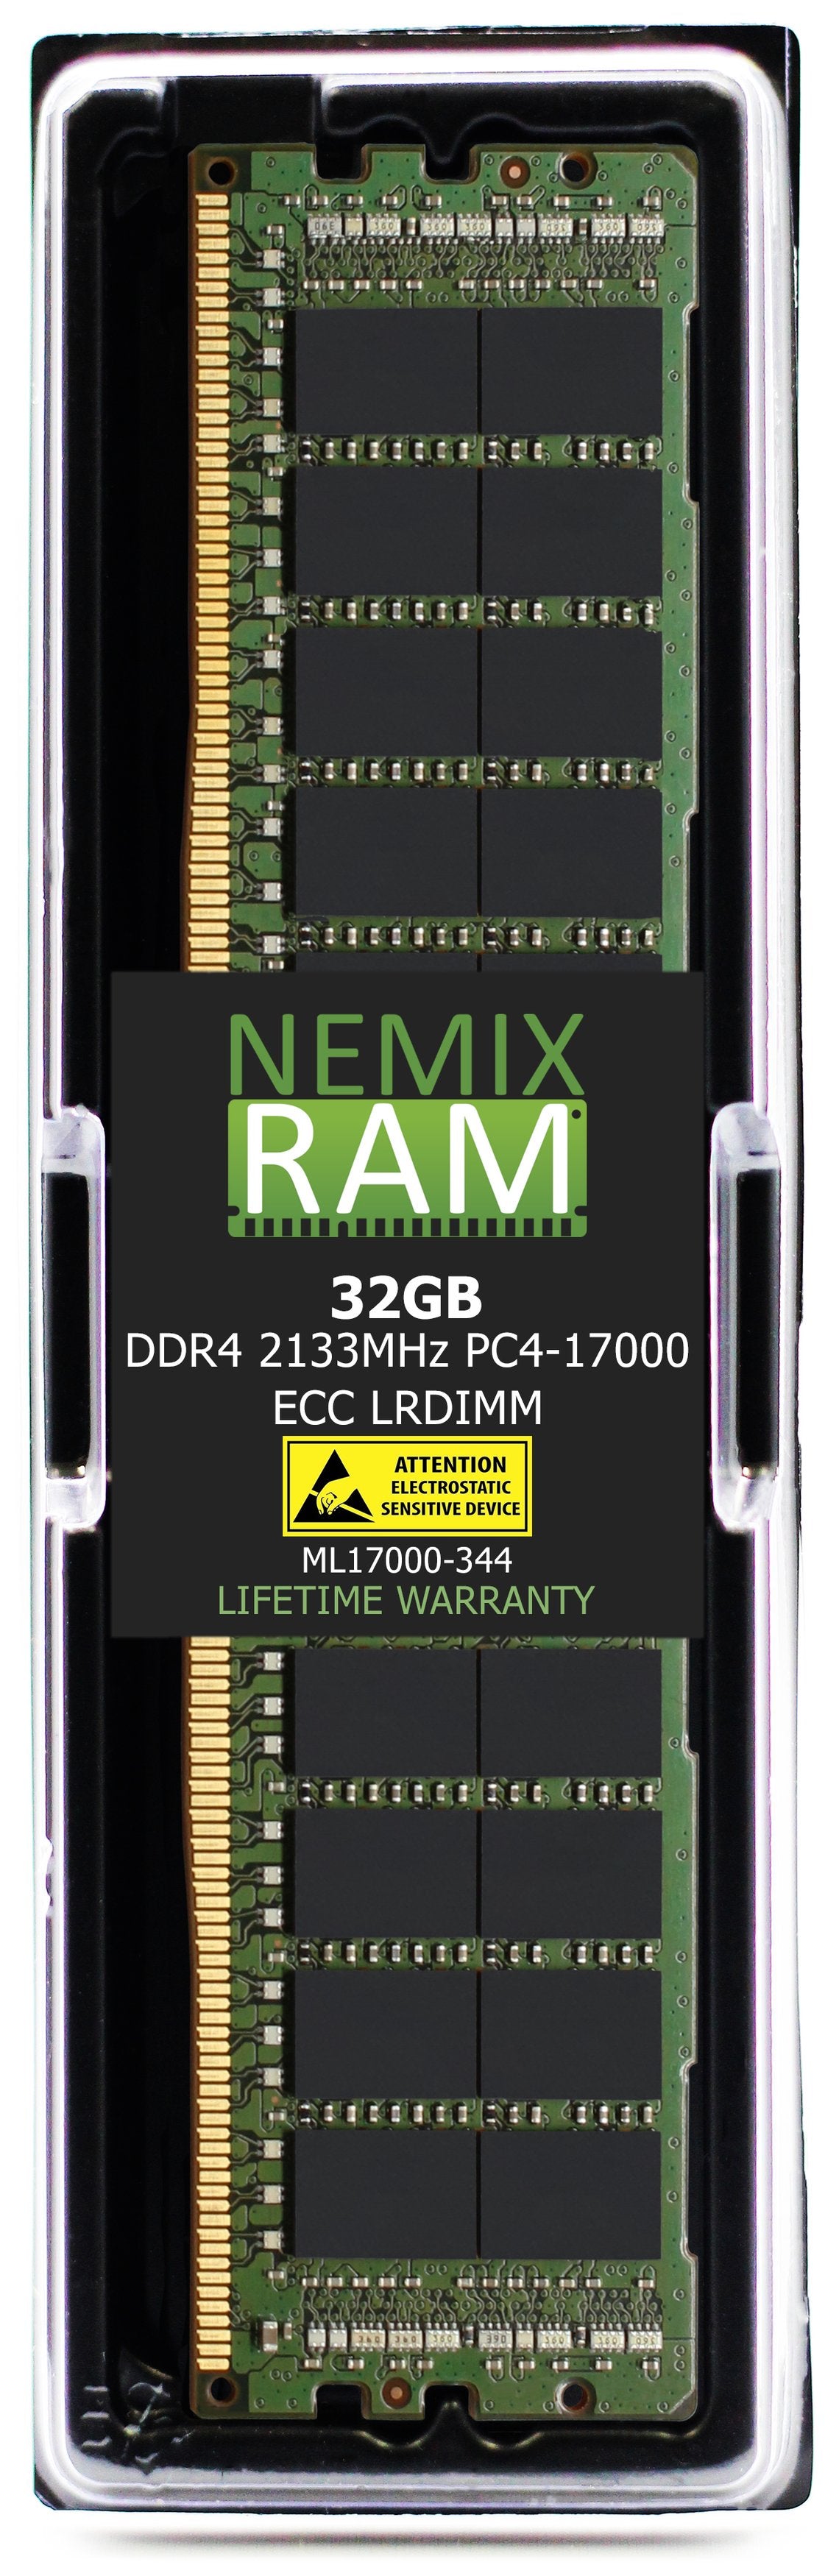 NEC Express5800 B120f Memory Module N8402-162F 32GBDDR4 2133MHZ PC4-17000 LRDIMM